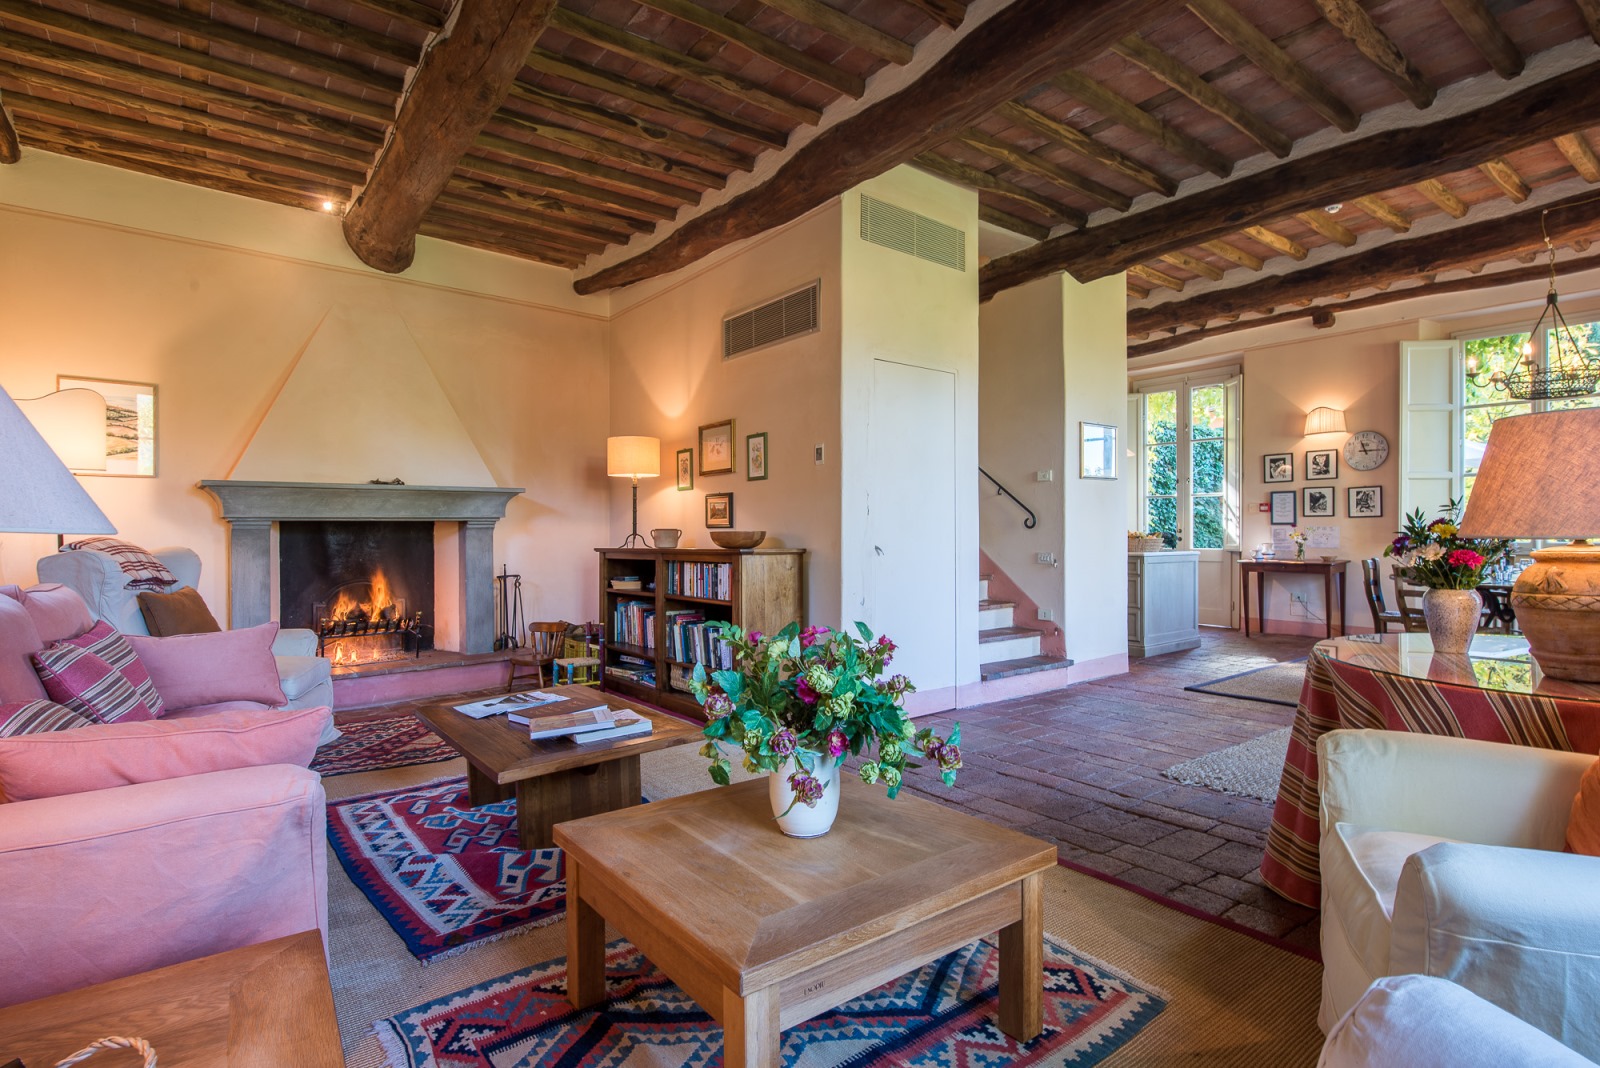 The piccola living room of l'Antico Mulino, Tuscany